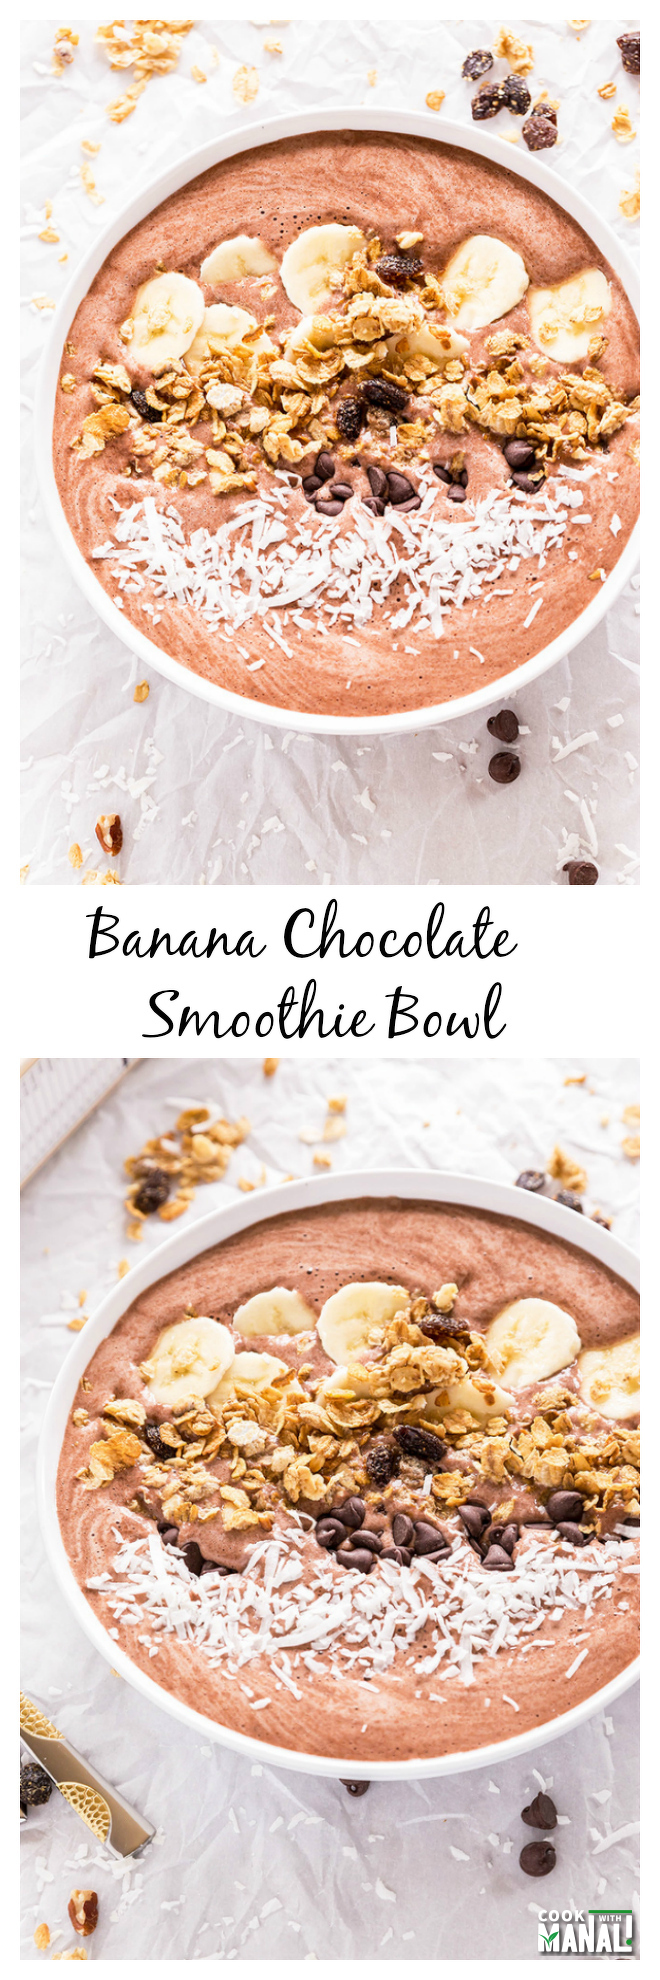 Banana Chocolate Smoothie Bowl Collage